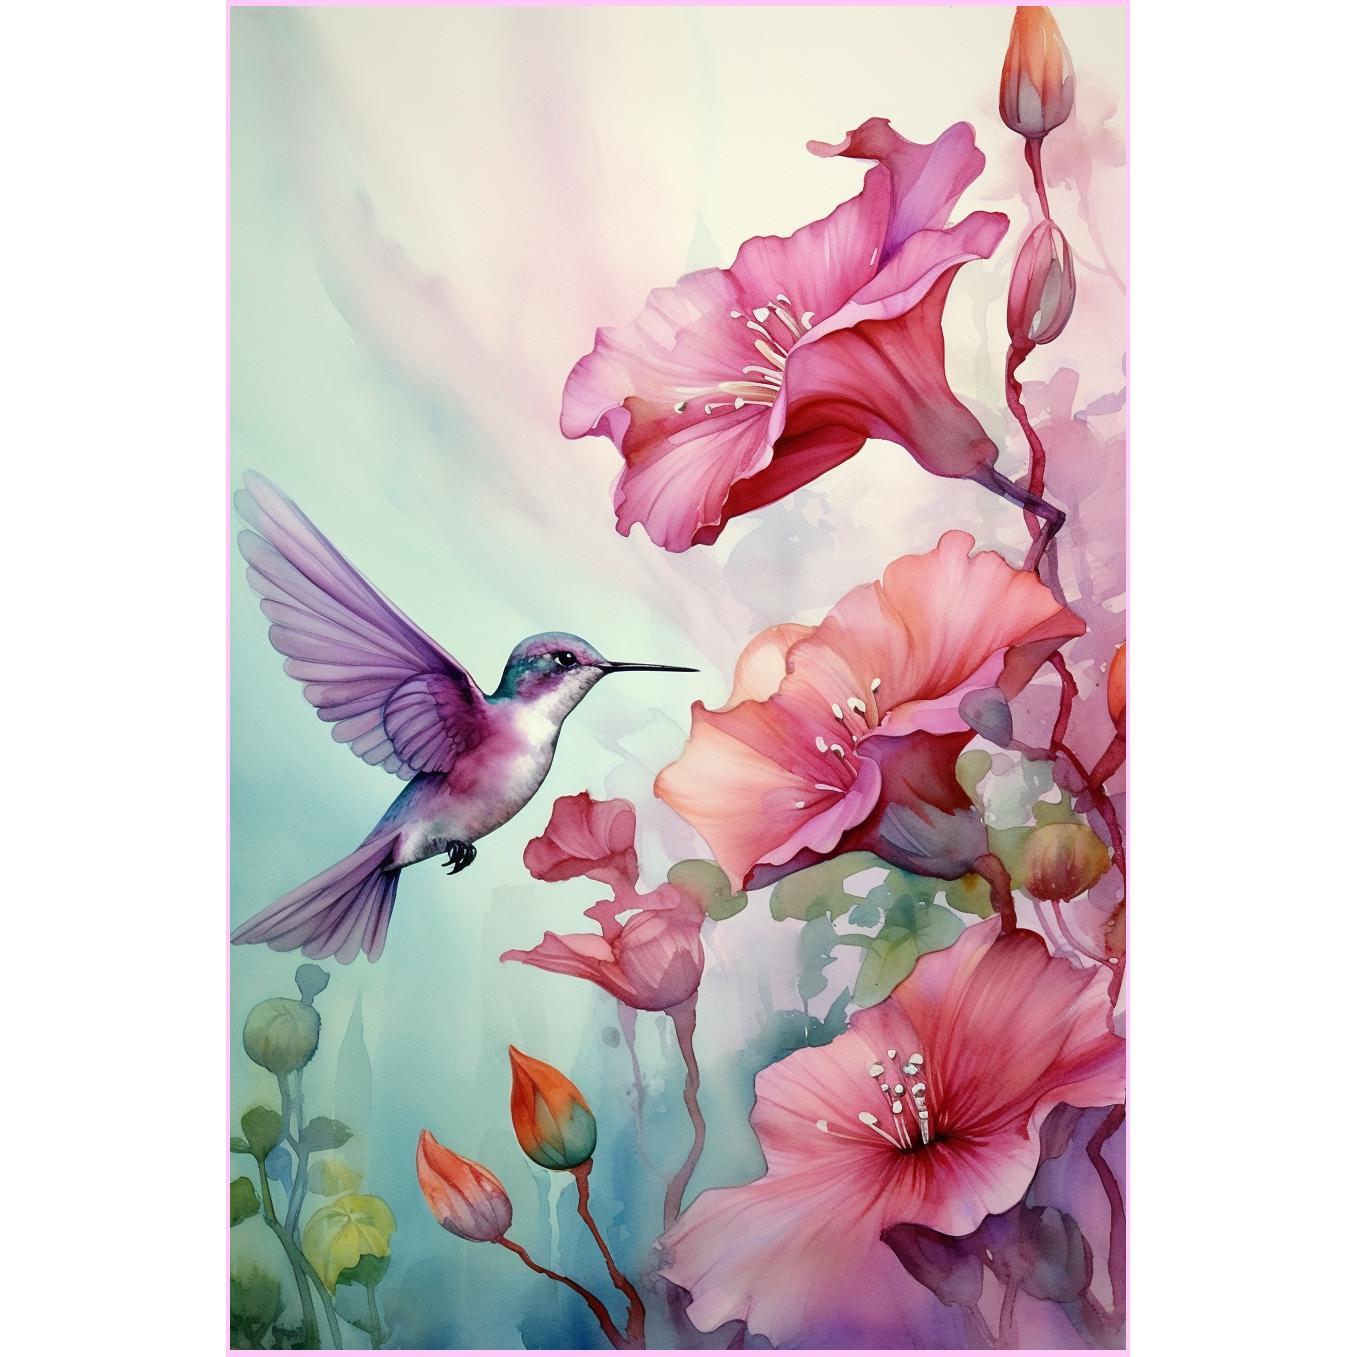 Hummingbird and Pink Blossoms Diamond Painting Kit-Heartful Diamonds